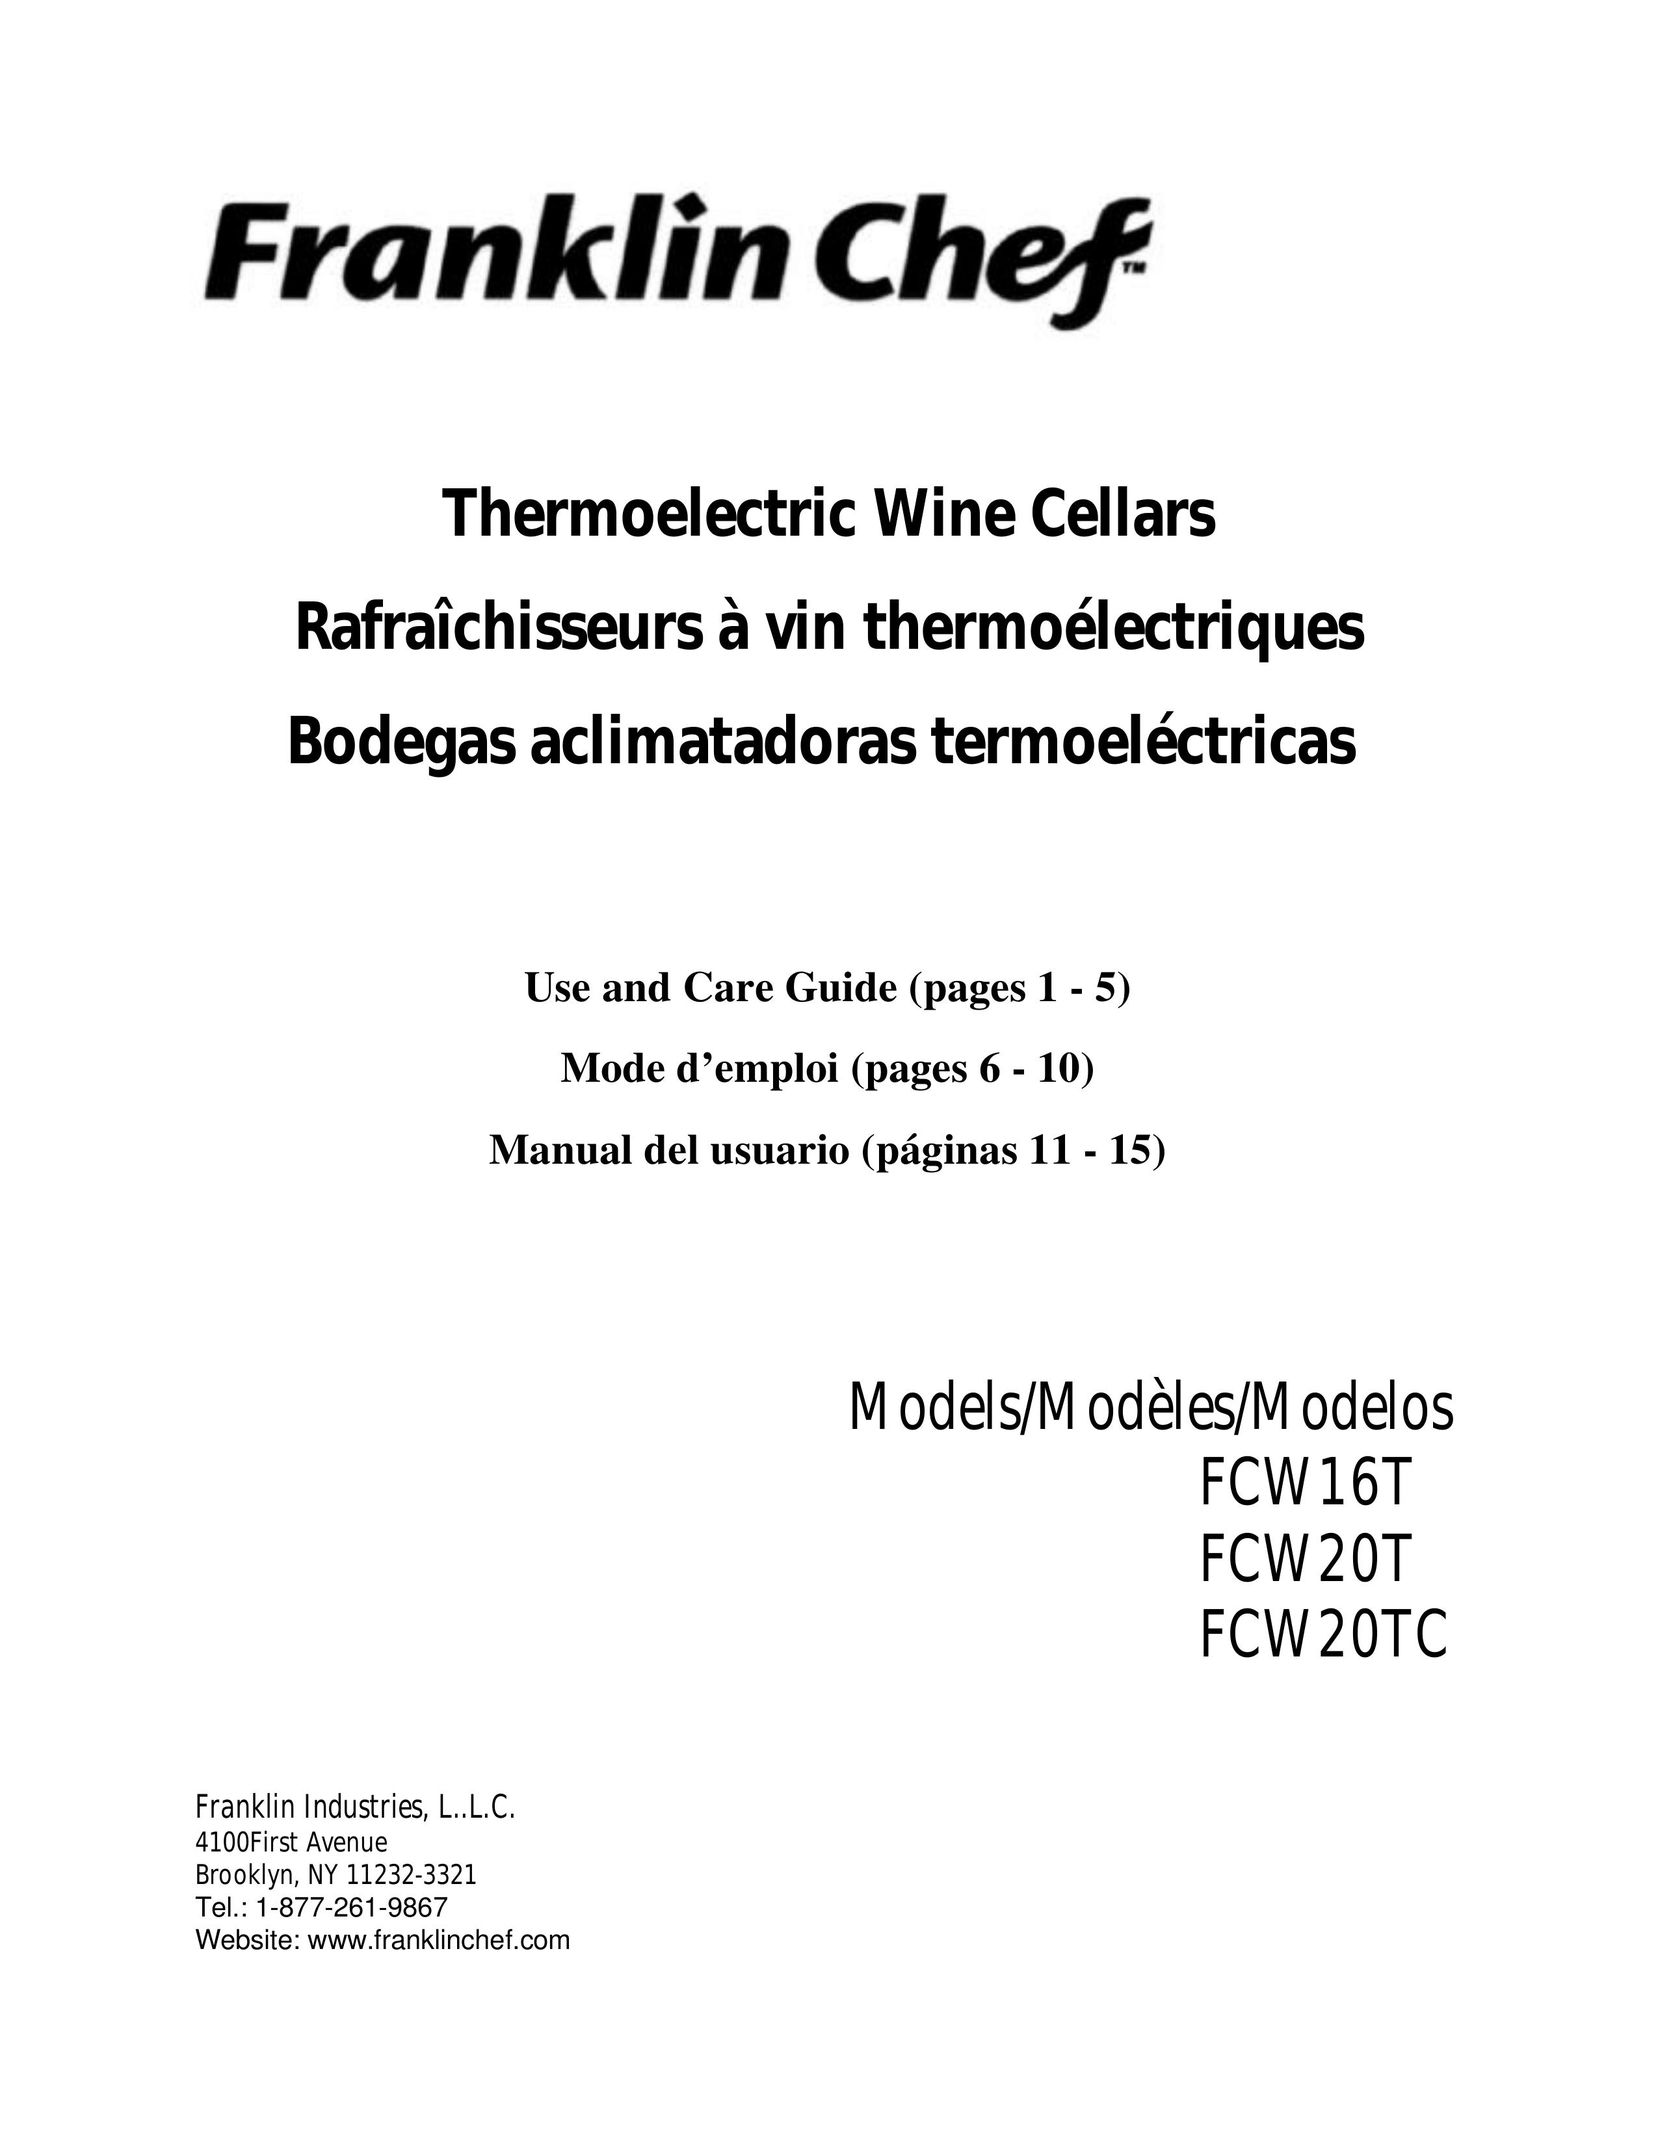 Franklin Industries, L.L.C. FCW20TC Beverage Dispenser User Manual